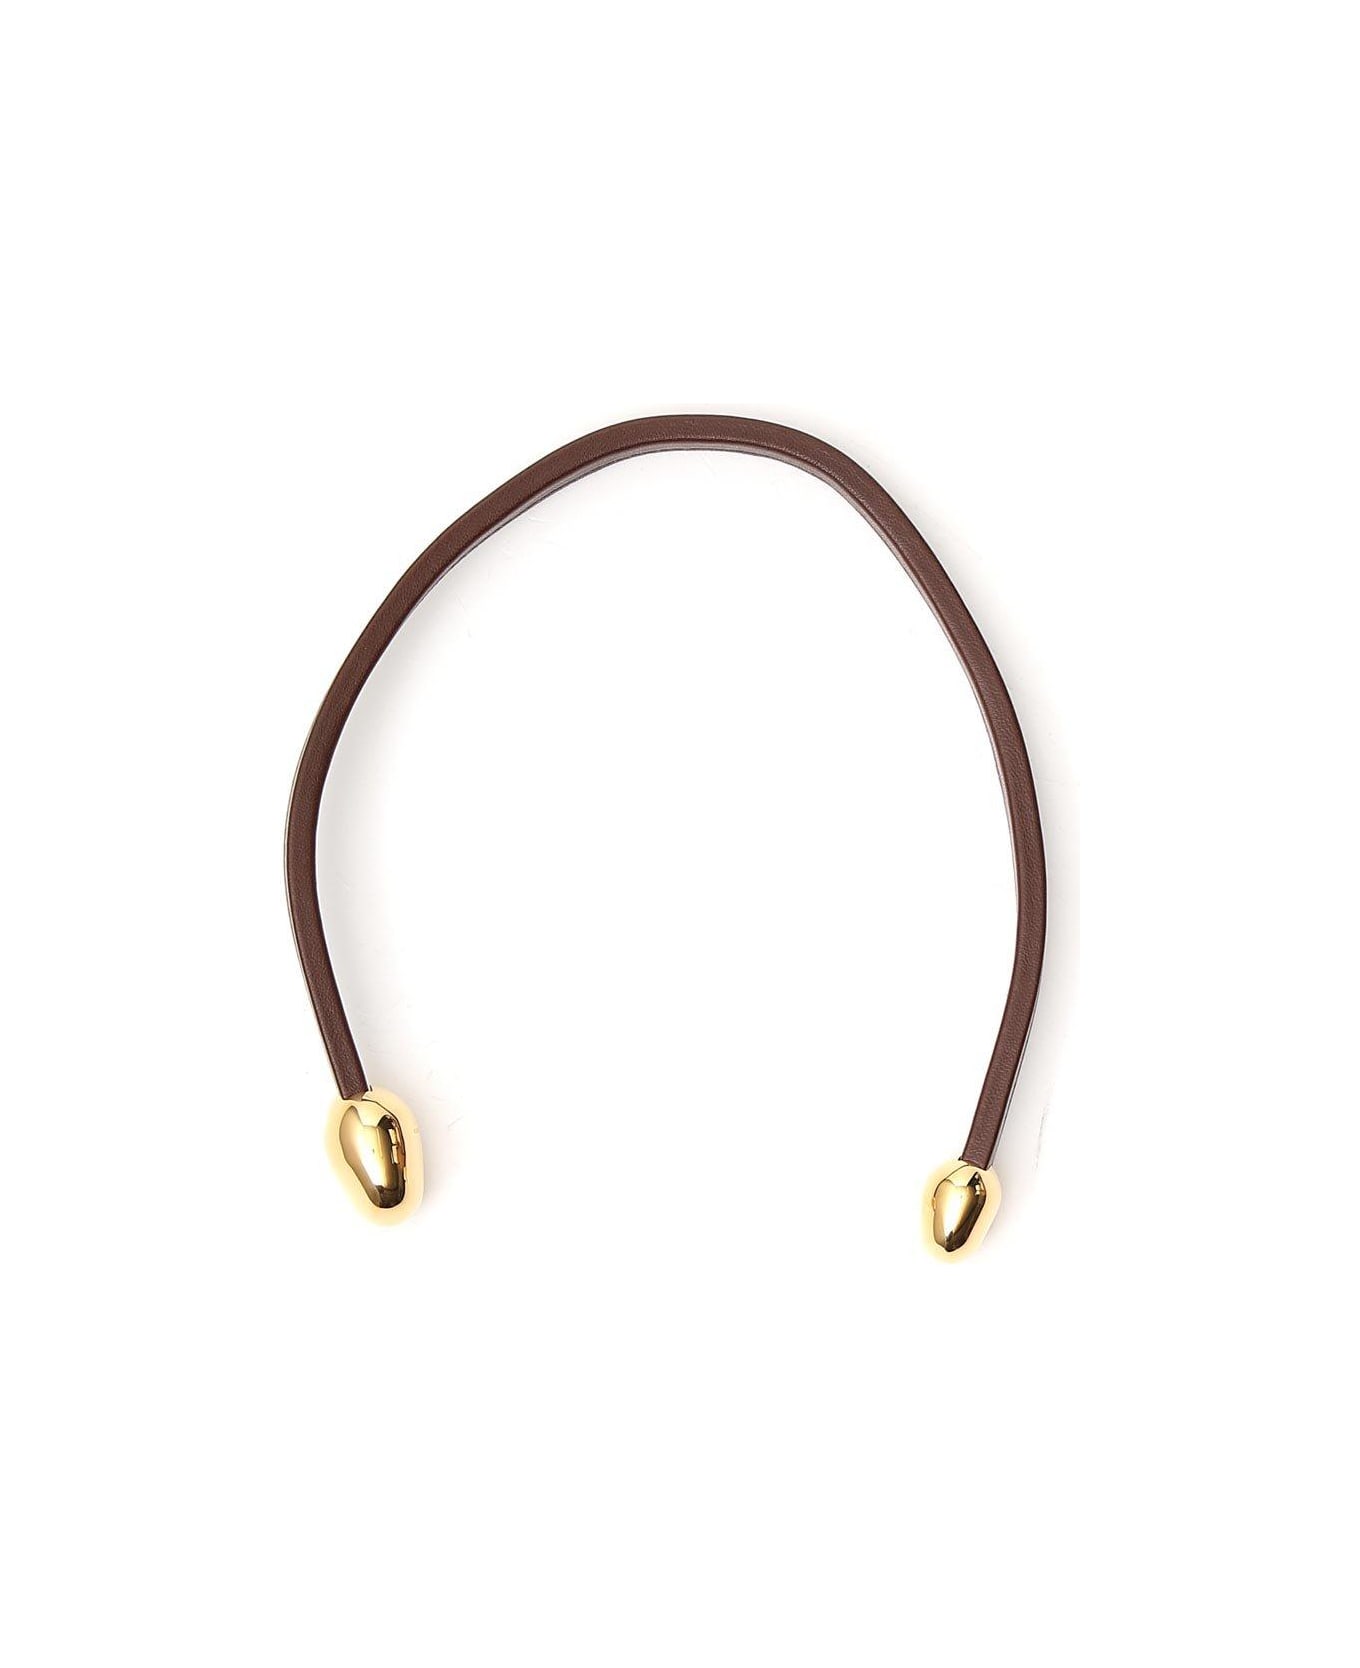 Bottega Veneta Leather Open Necklace - BROWN ネックレス